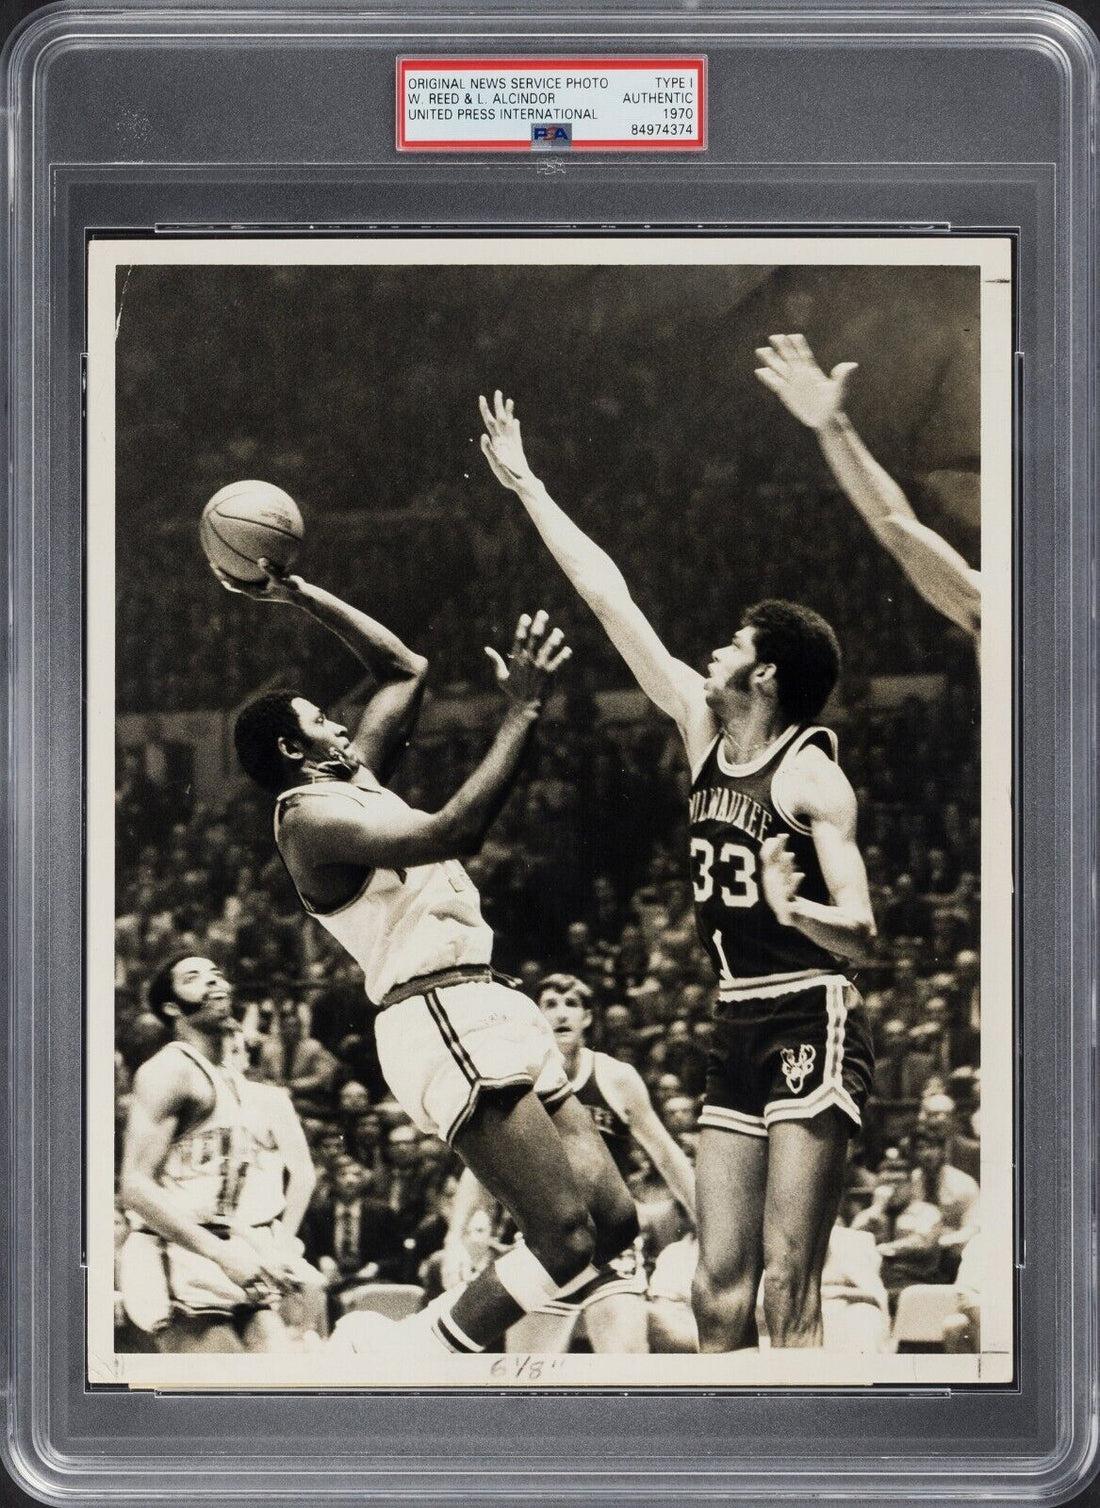 1970 Kareem Abdul-Jabbar Willis Reed Type 1 Photograph NBA Playoffs Photo PSA